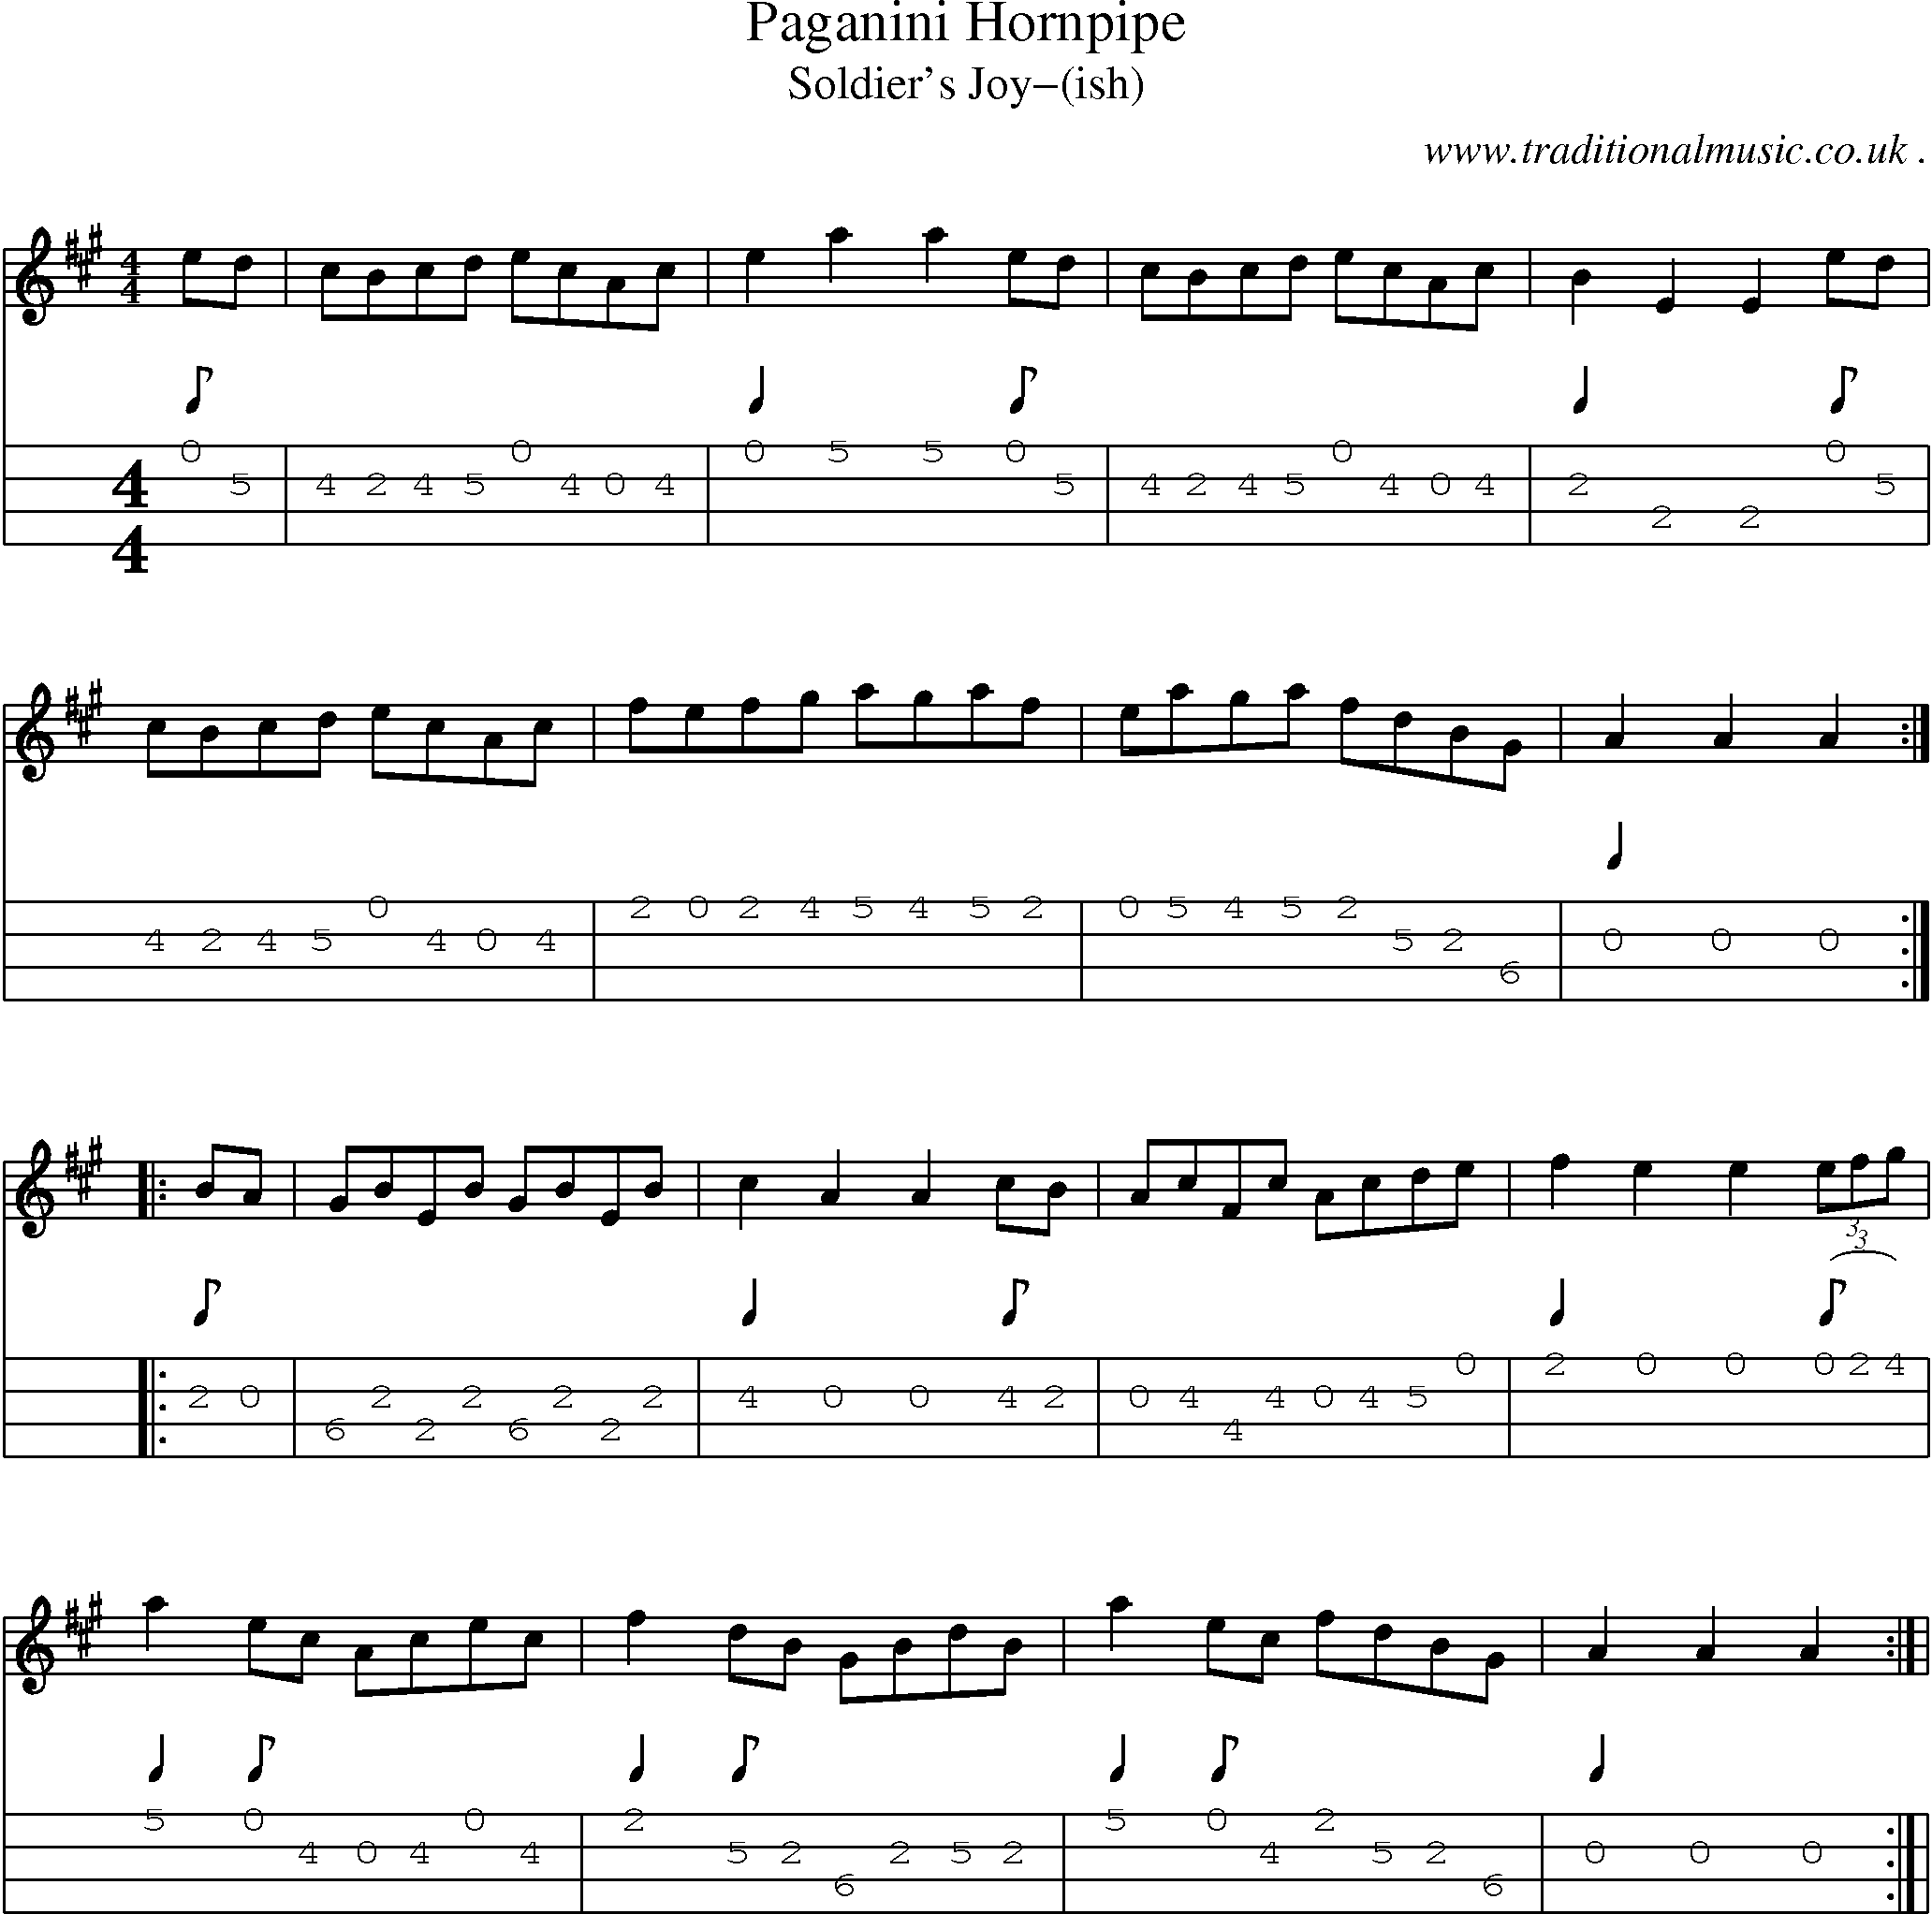 Sheet-Music and Mandolin Tabs for Paganini Hornpipe